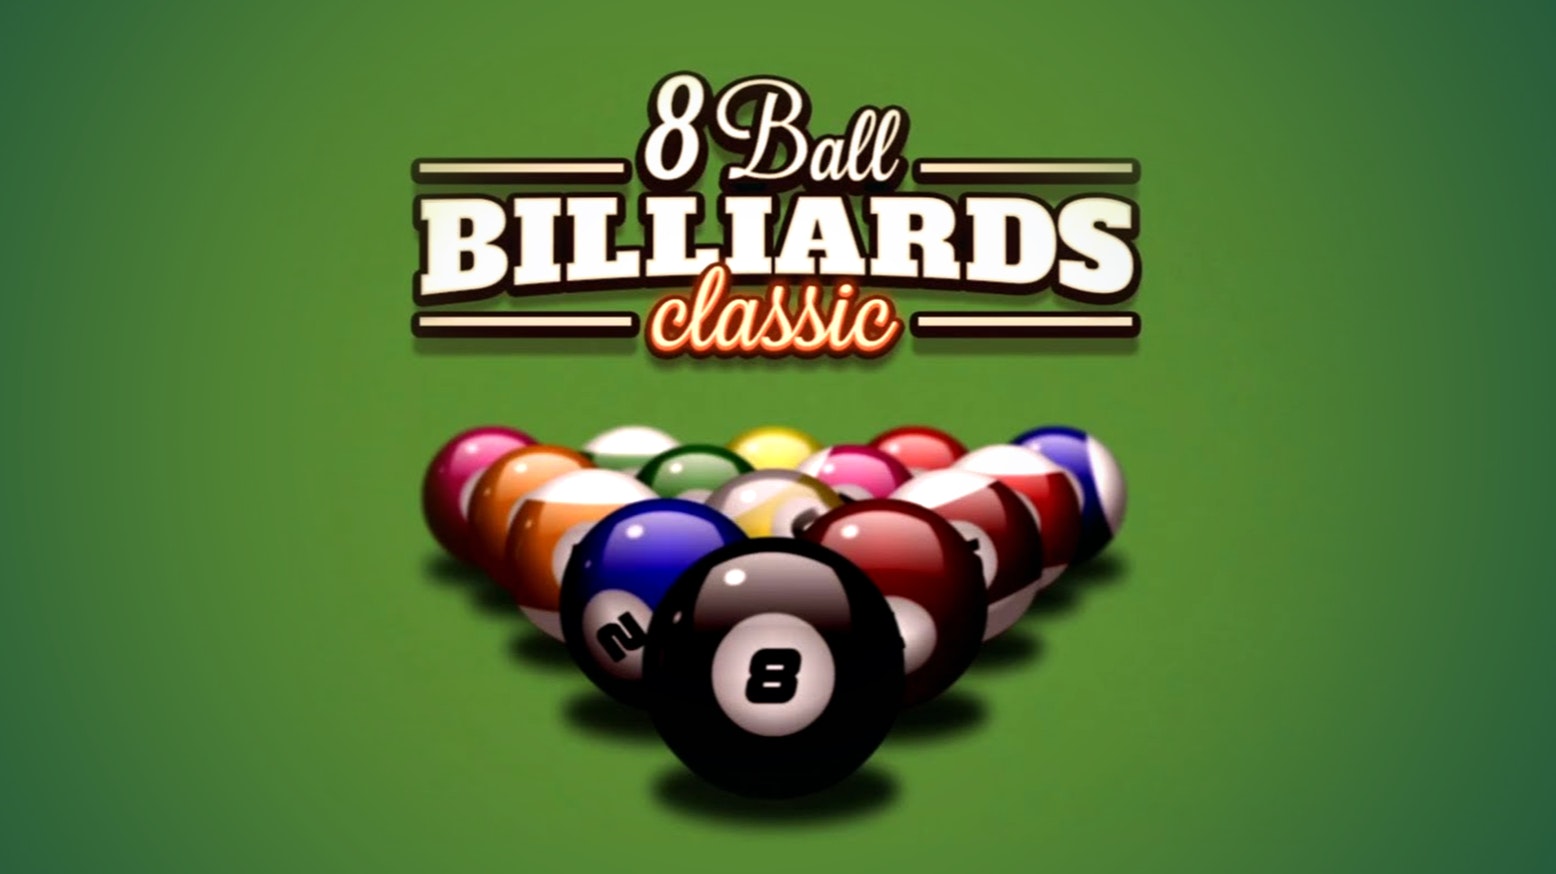 barricade Sparkle rim 8 Ball Billiards Classic | CrazyGames - Play Now!